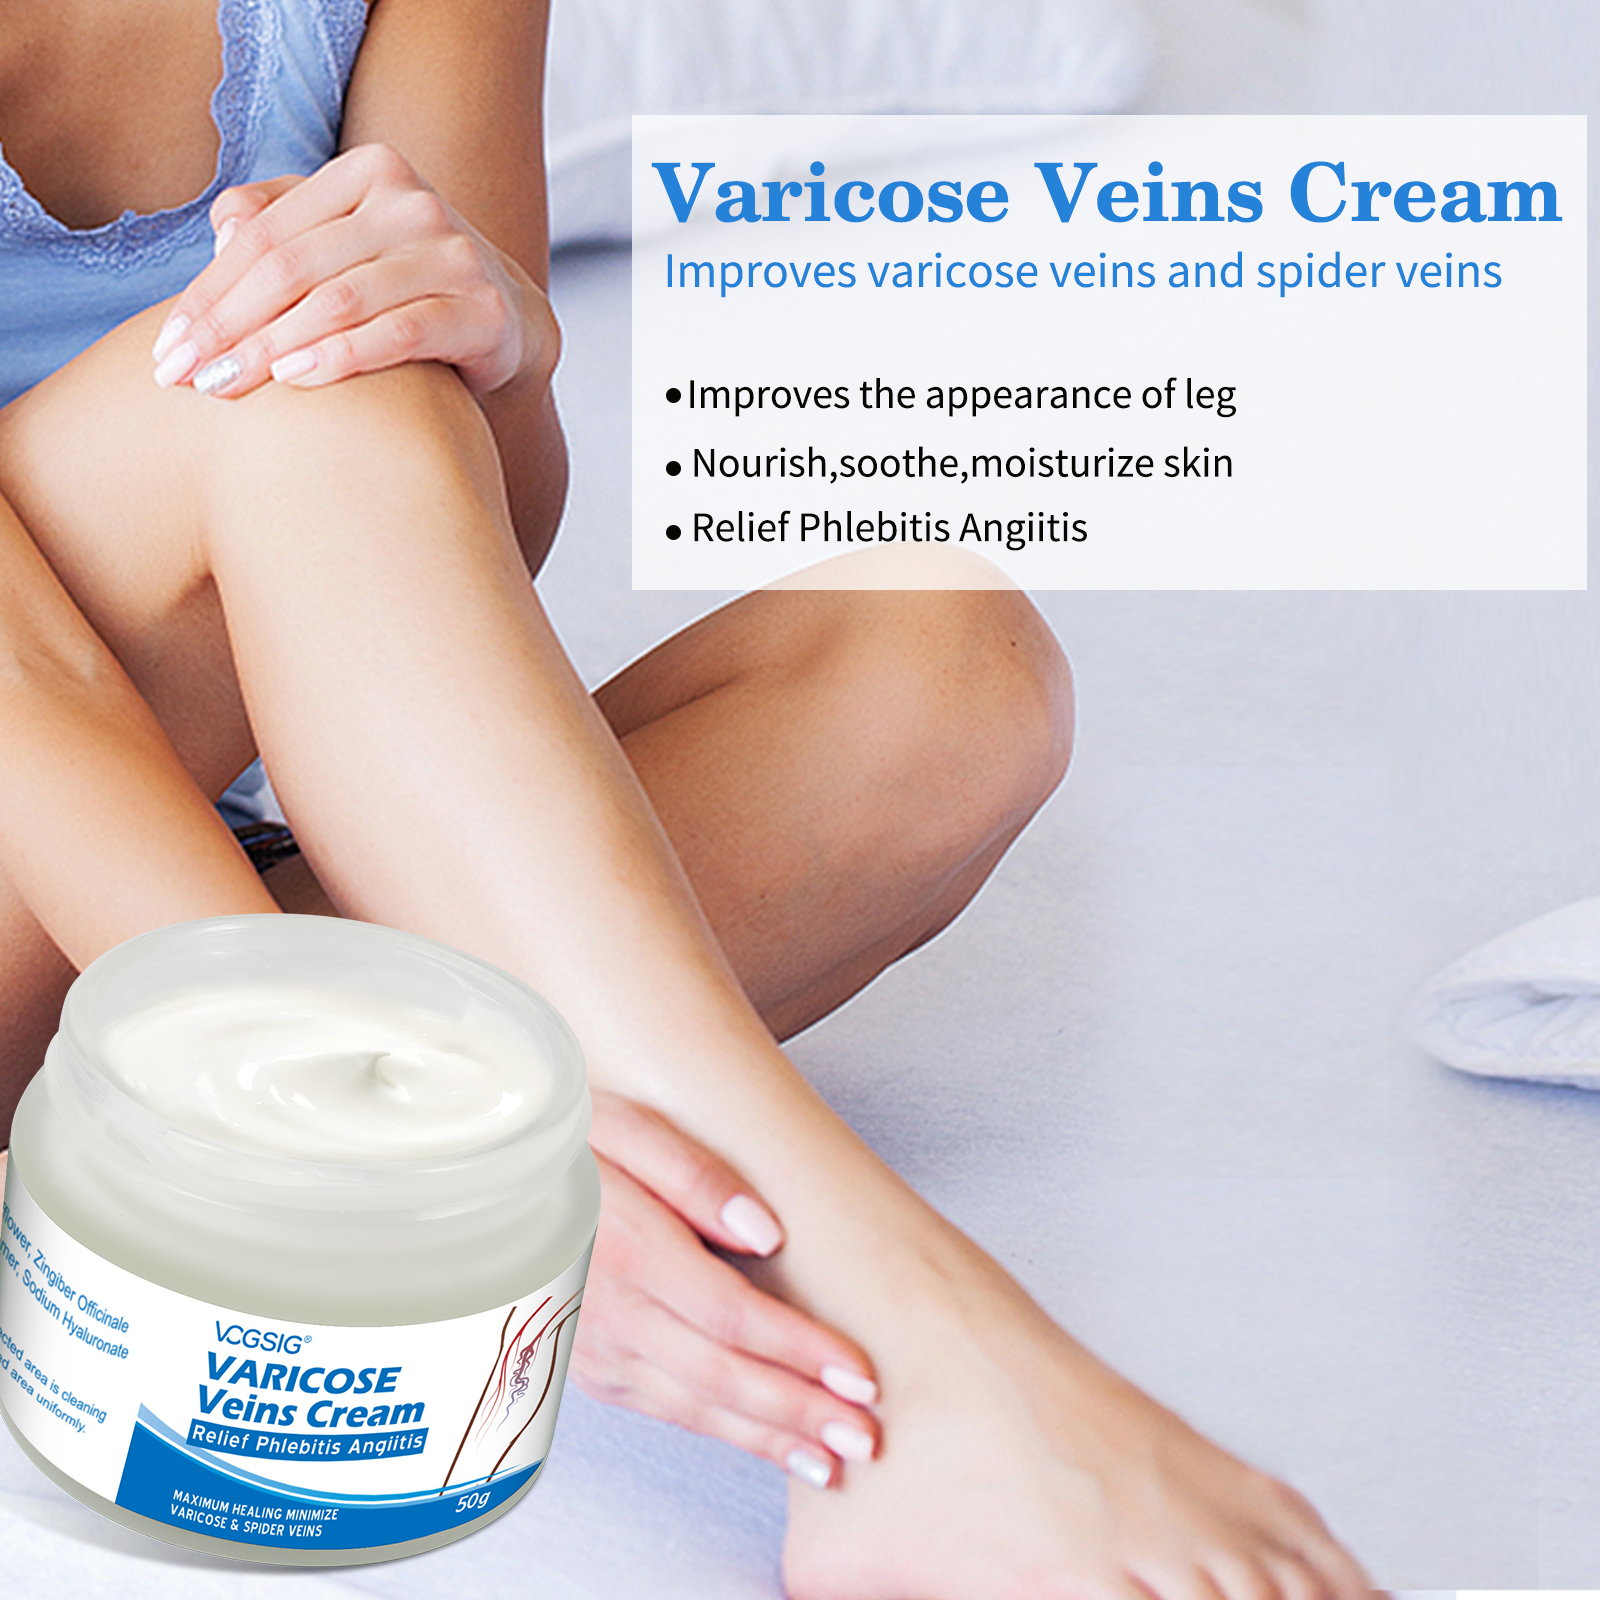 VOGSIG Removal Varicose Veins Treatment Cream Anti Spider Stretch Marks Vasculitis Advanced Legs Health Repair Support Phlebitis